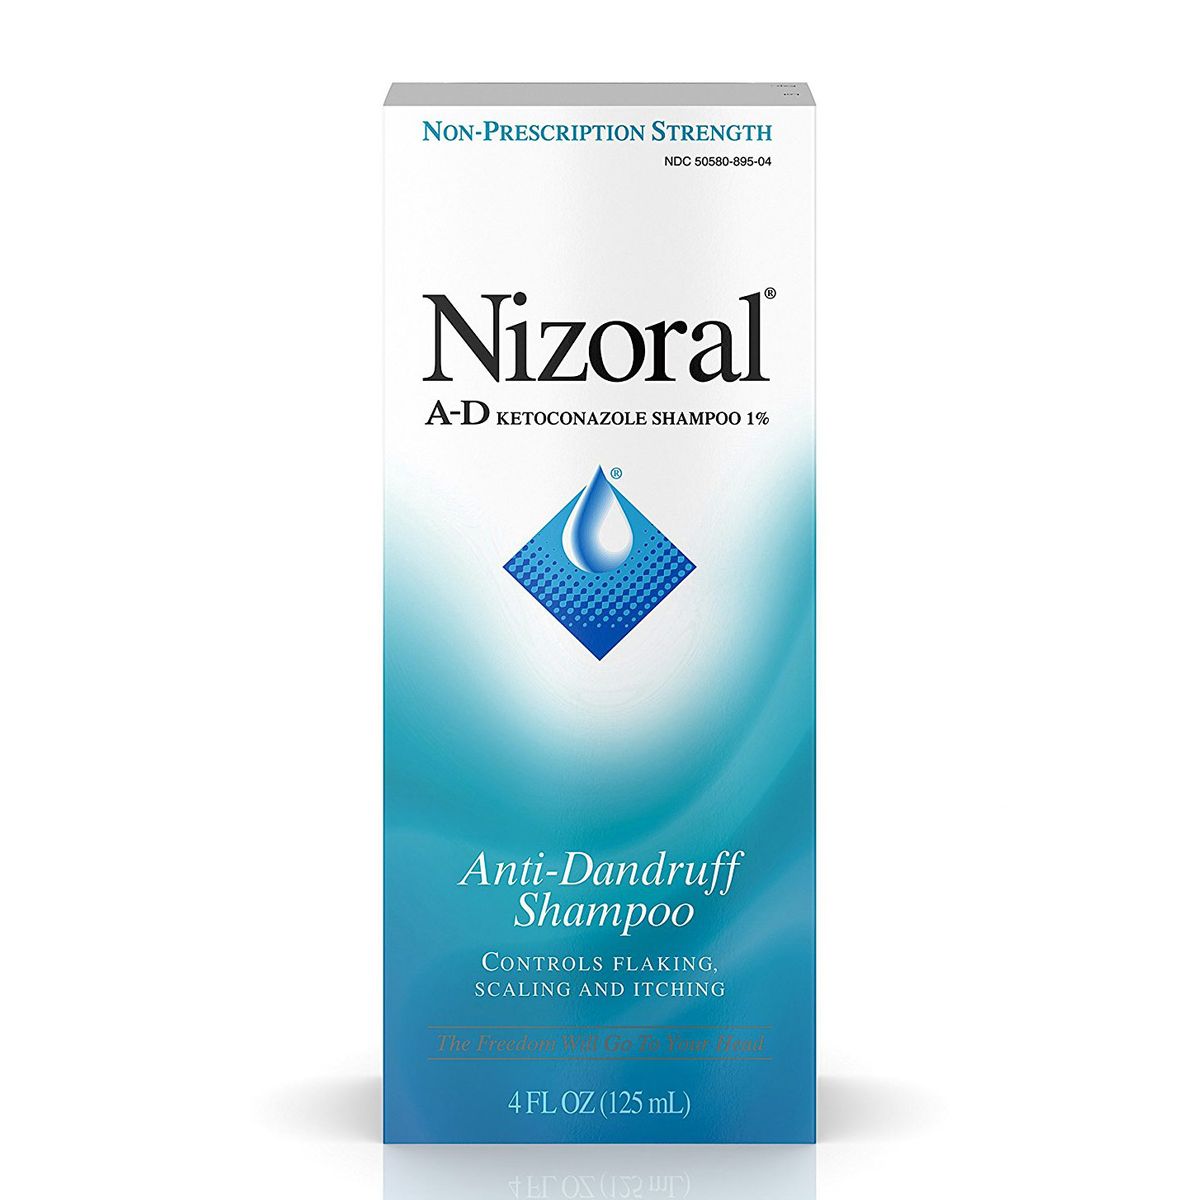 Nizoral Anti-Dandruff Shampoo: Review 2020